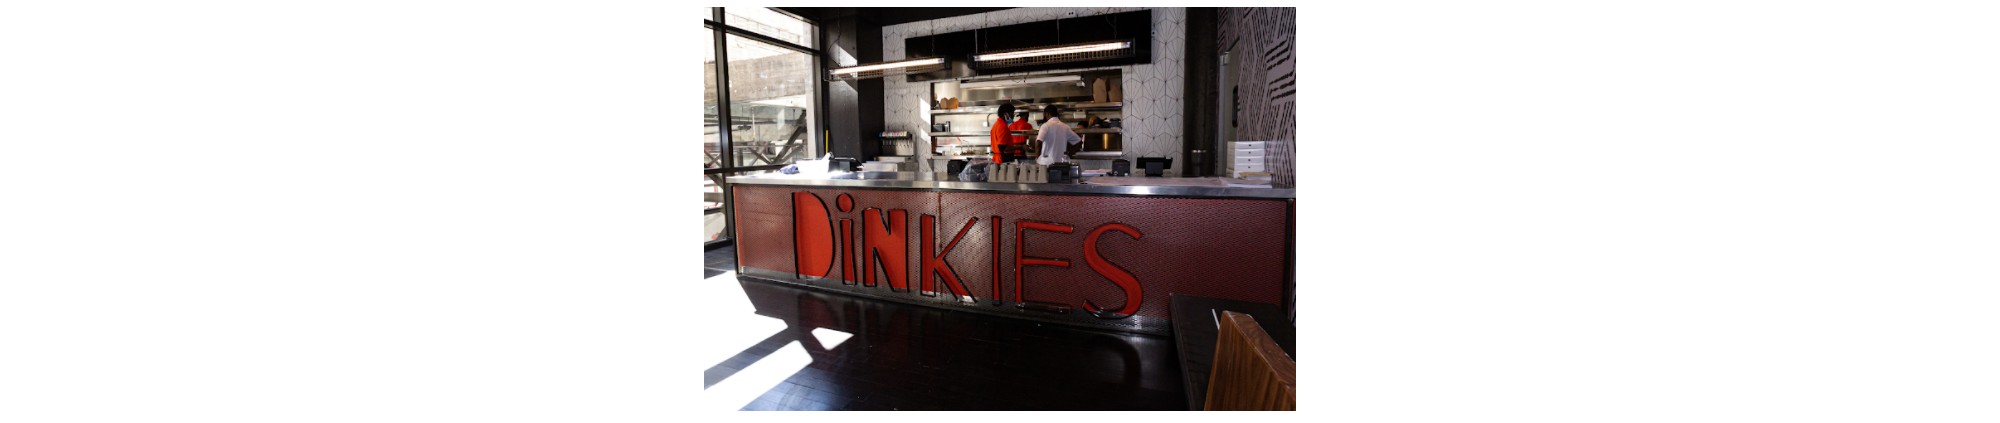 Visit Dinkies in Atlanta, GA for Delicious Vegan Cheesesteaks (1)